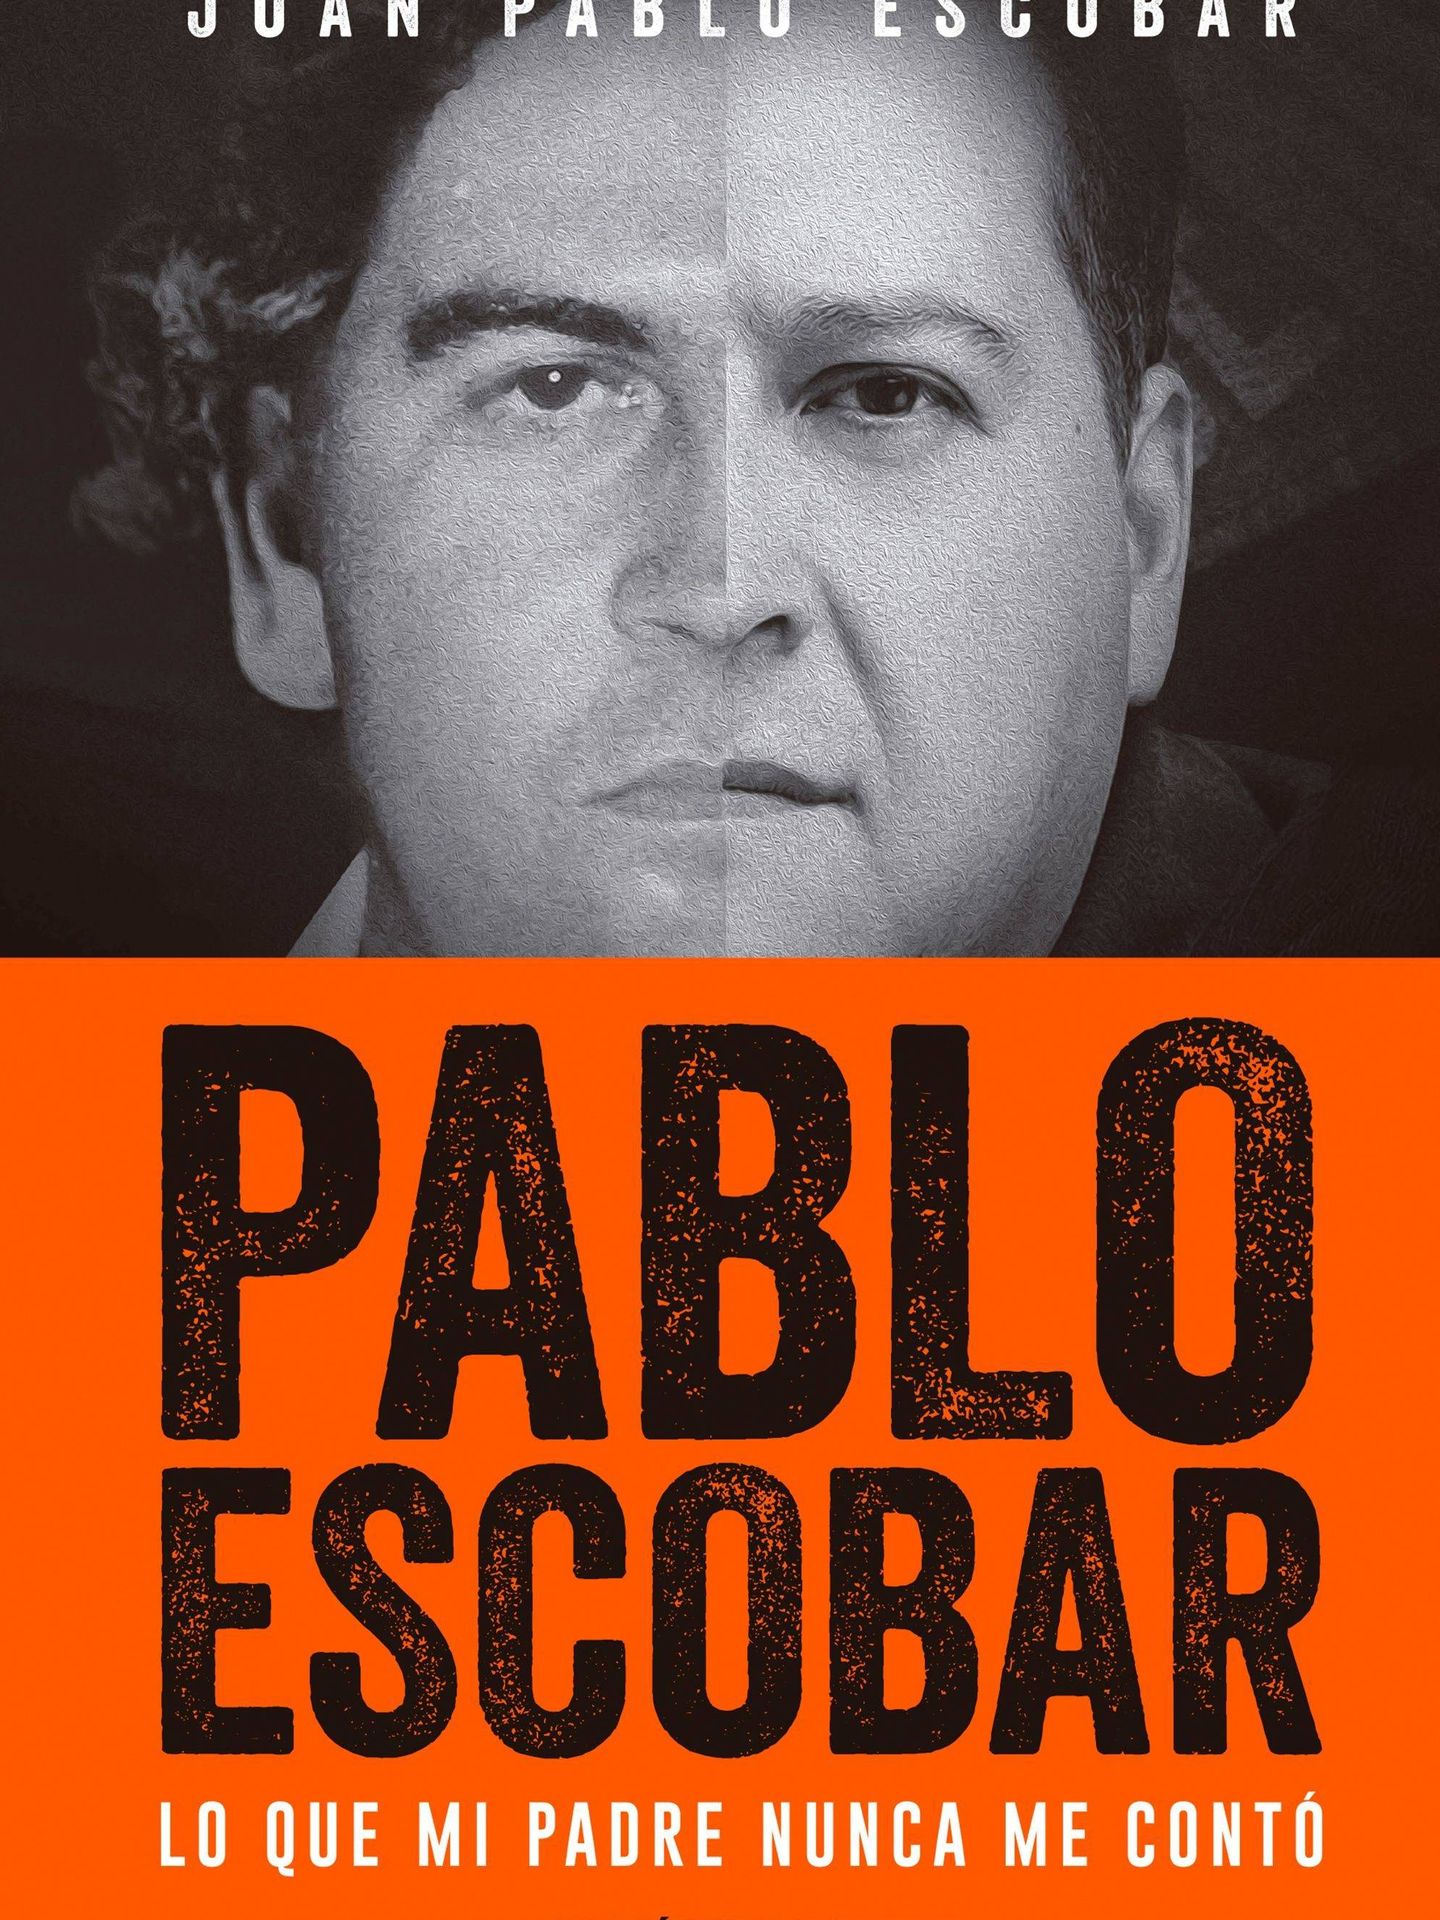 Portada del libro de Juan Pablo Escobar